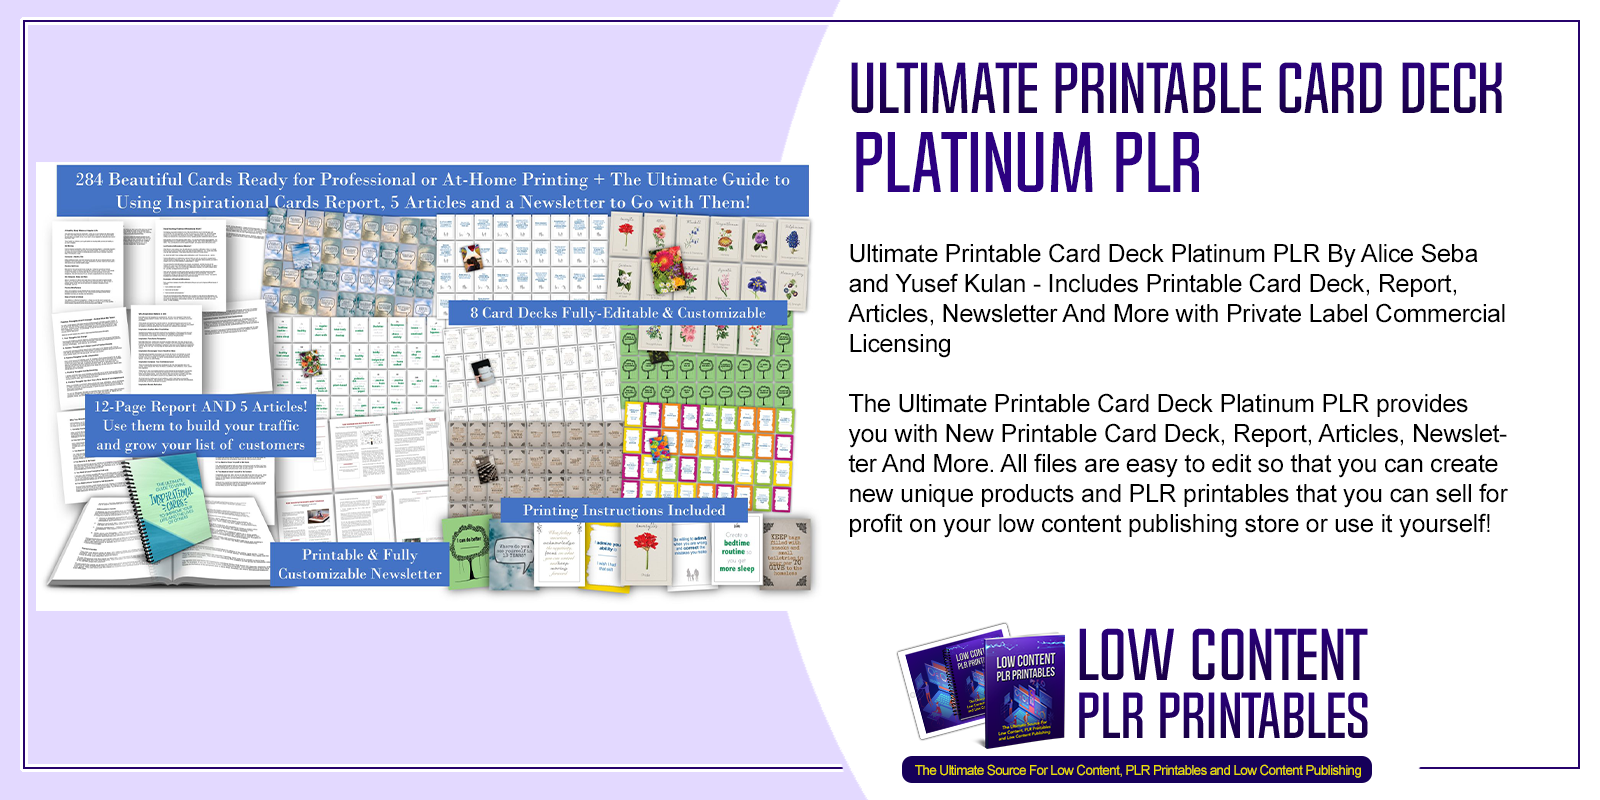 Ultimate Printable Card Deck Platinum PLR 2